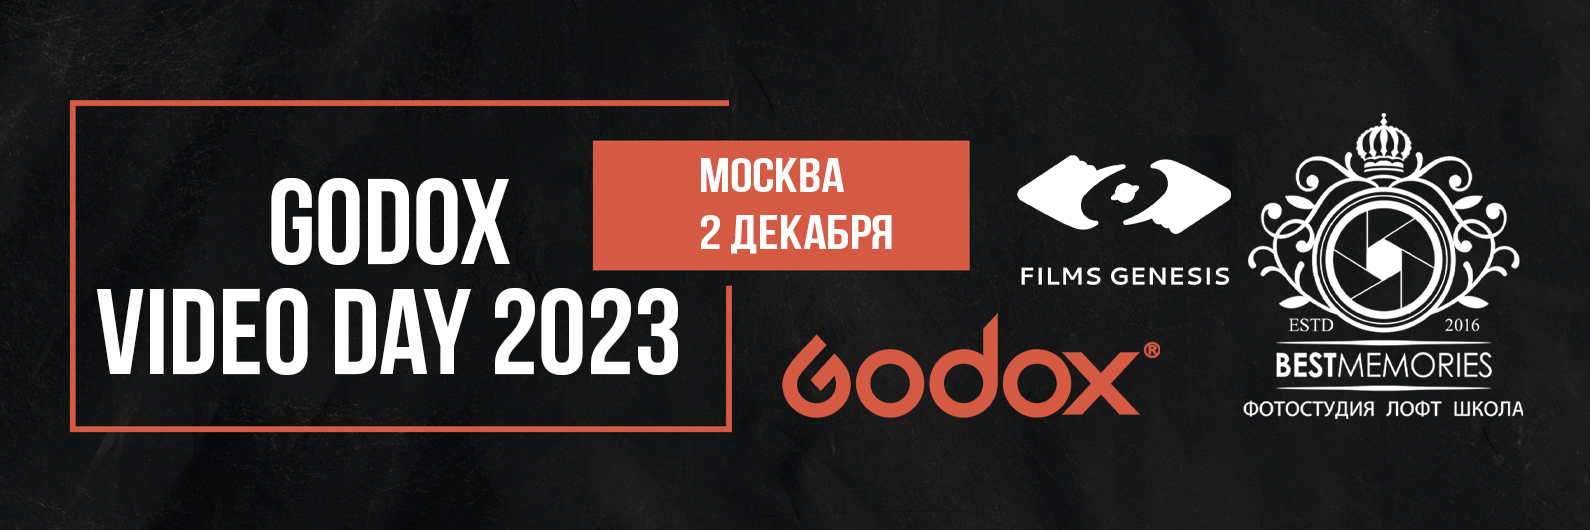 (1590х530) Godox Video Day 2023.jpg